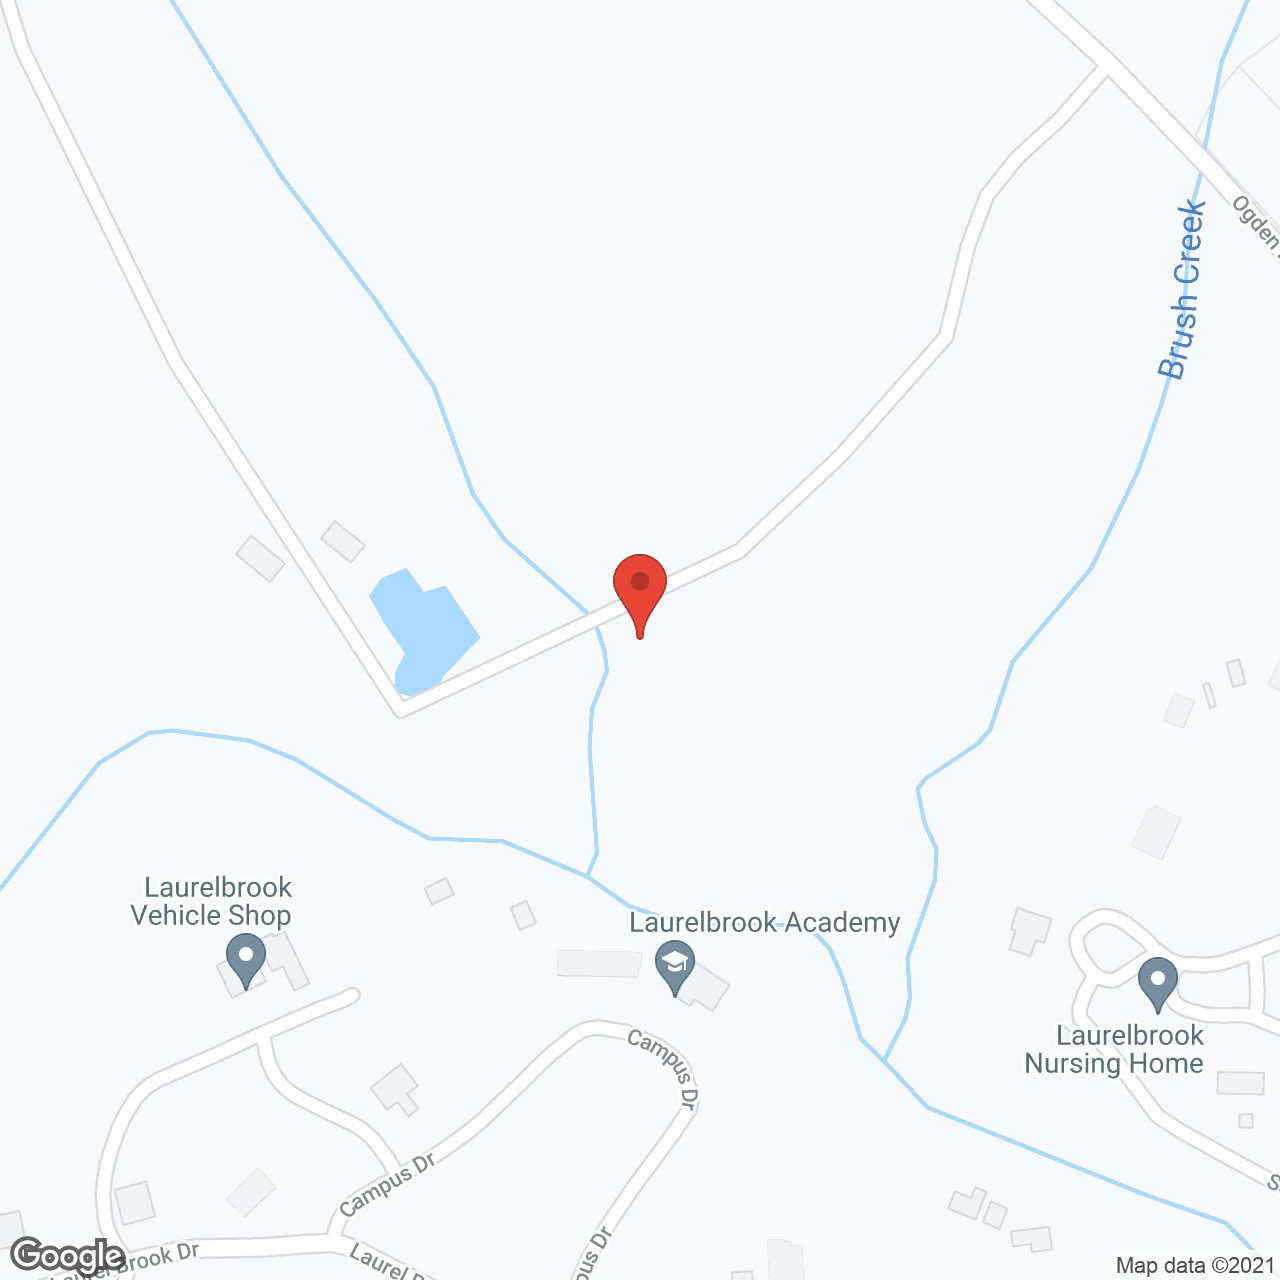 Laurelbrook Nursing Home in google map